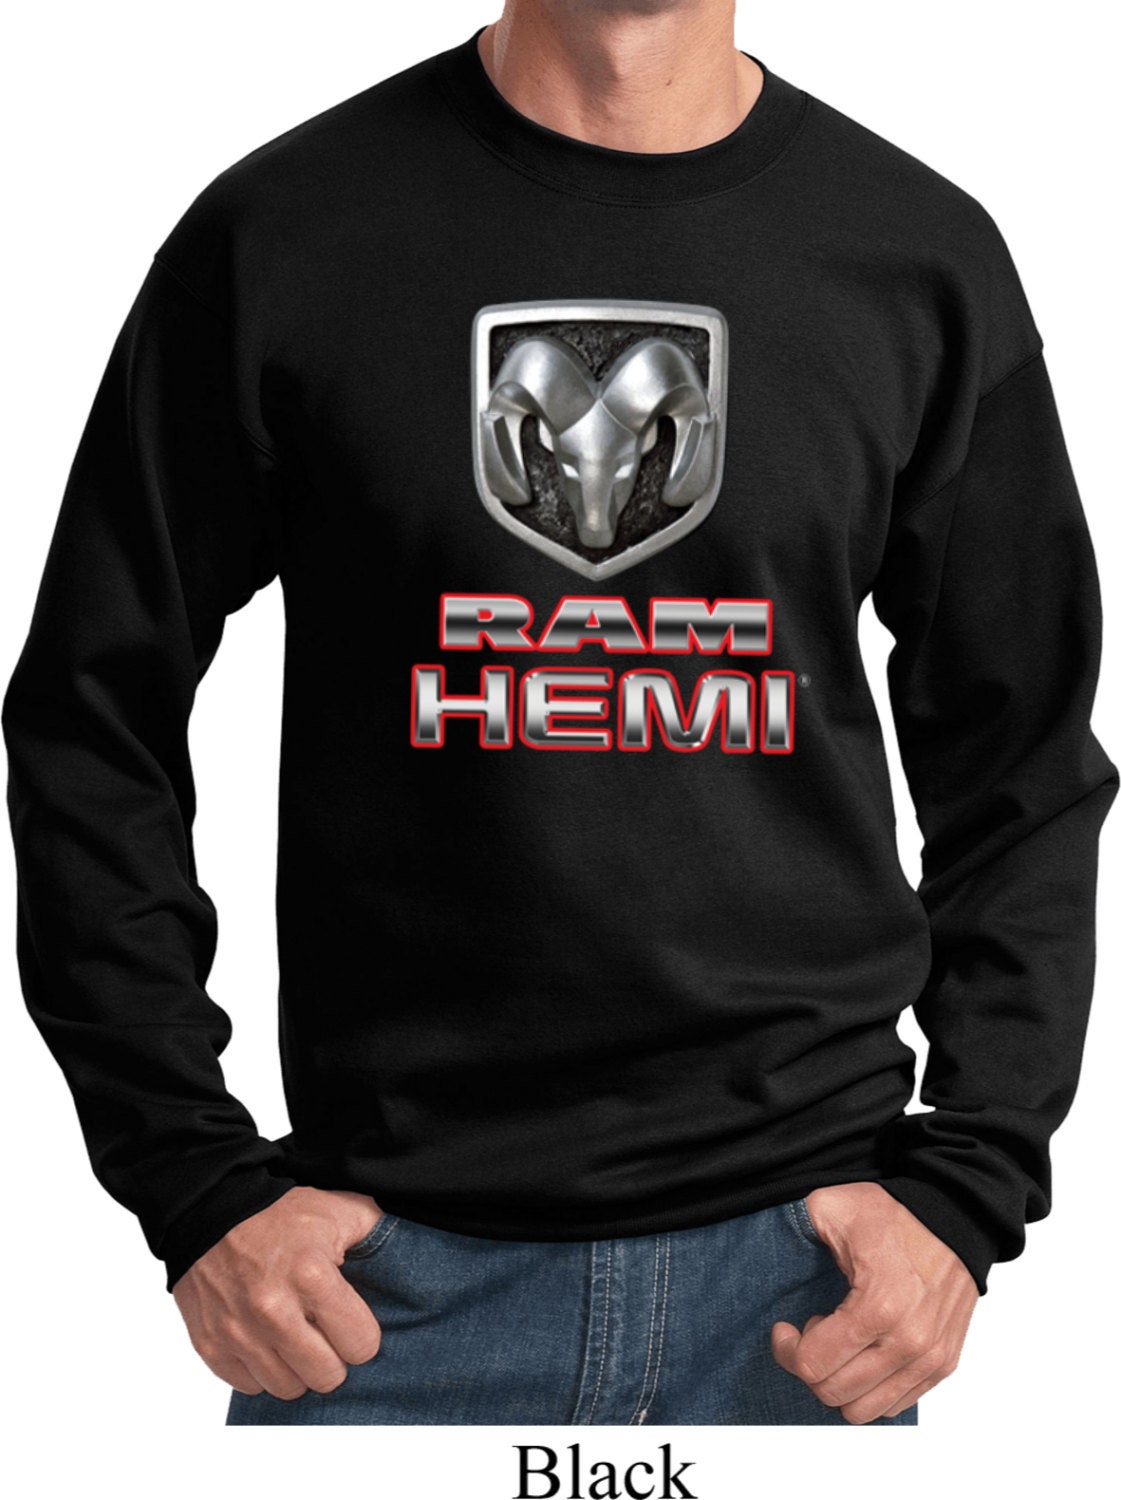 Dodge Ram Hemi Logo Sweatshirt 20459Hd2-Pc90